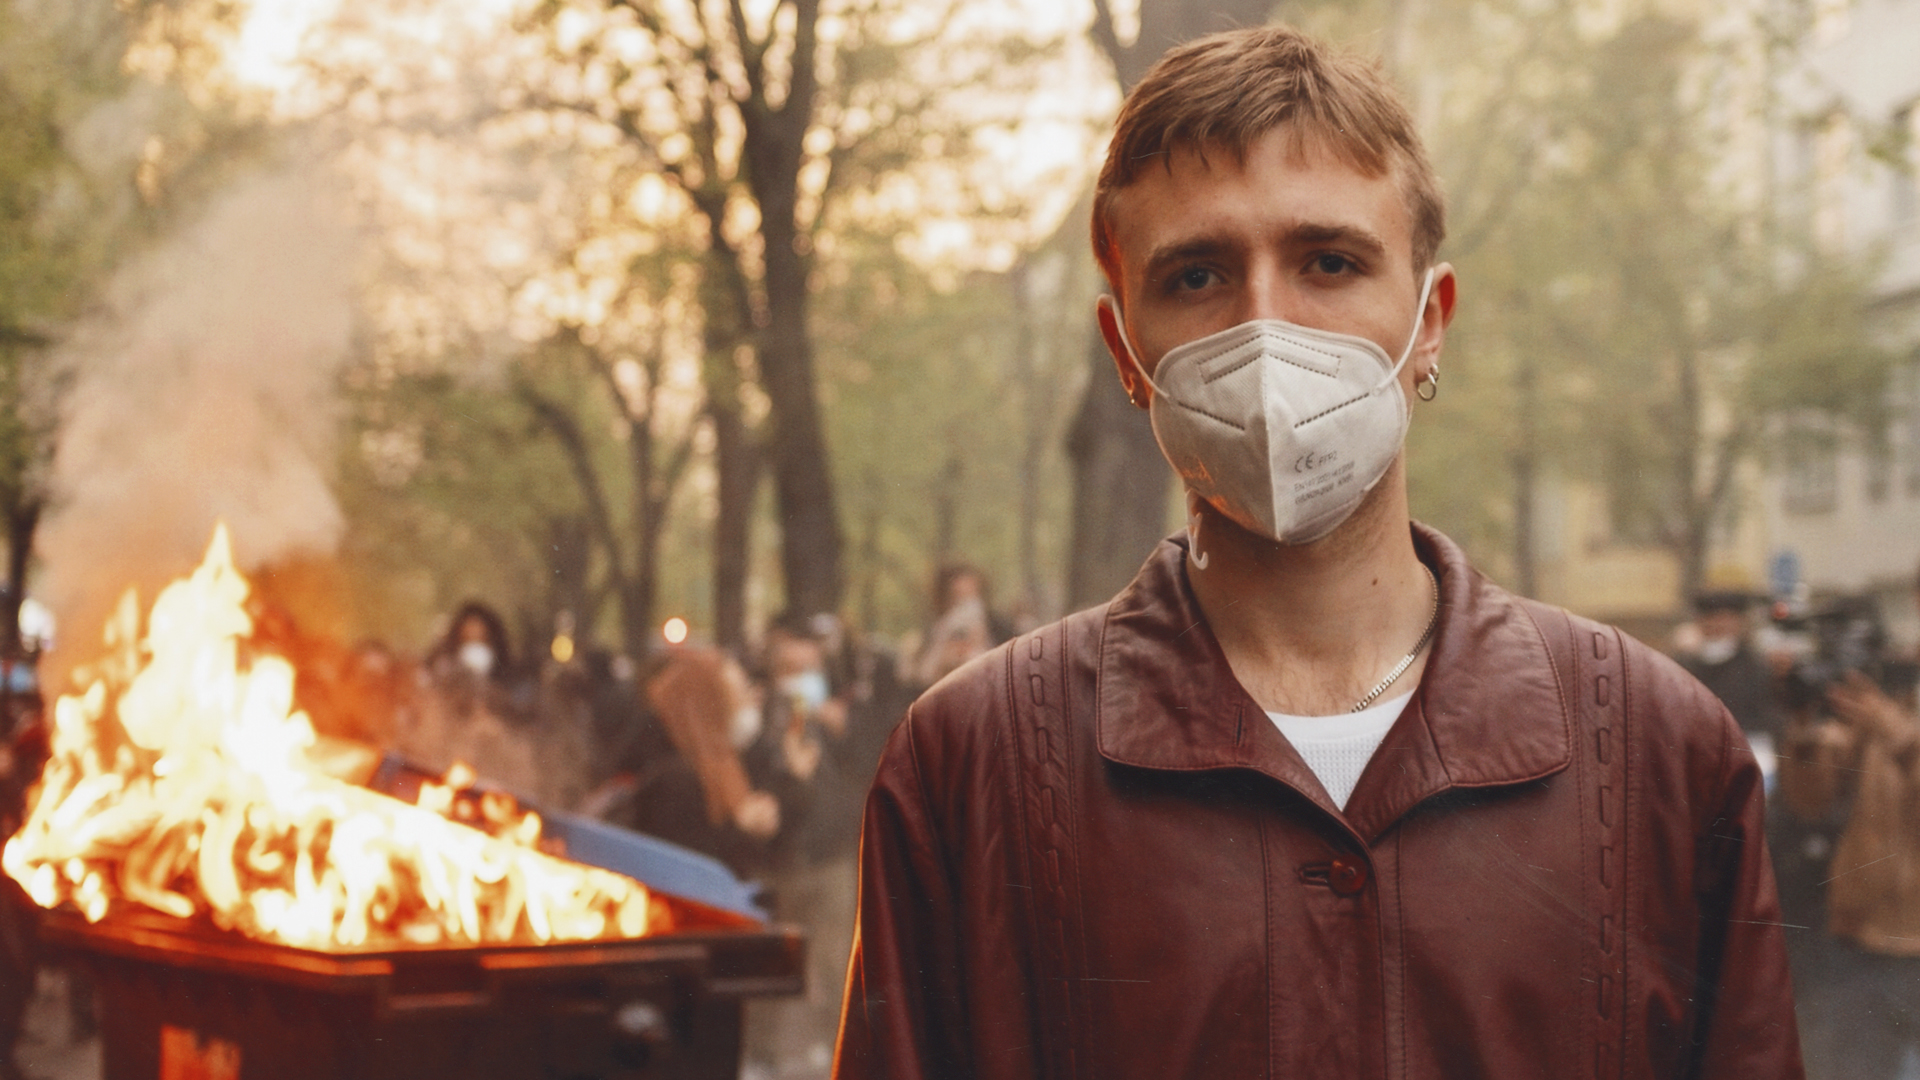 Junger Mann mit Maske vor brennender Mülltonne in Berlin